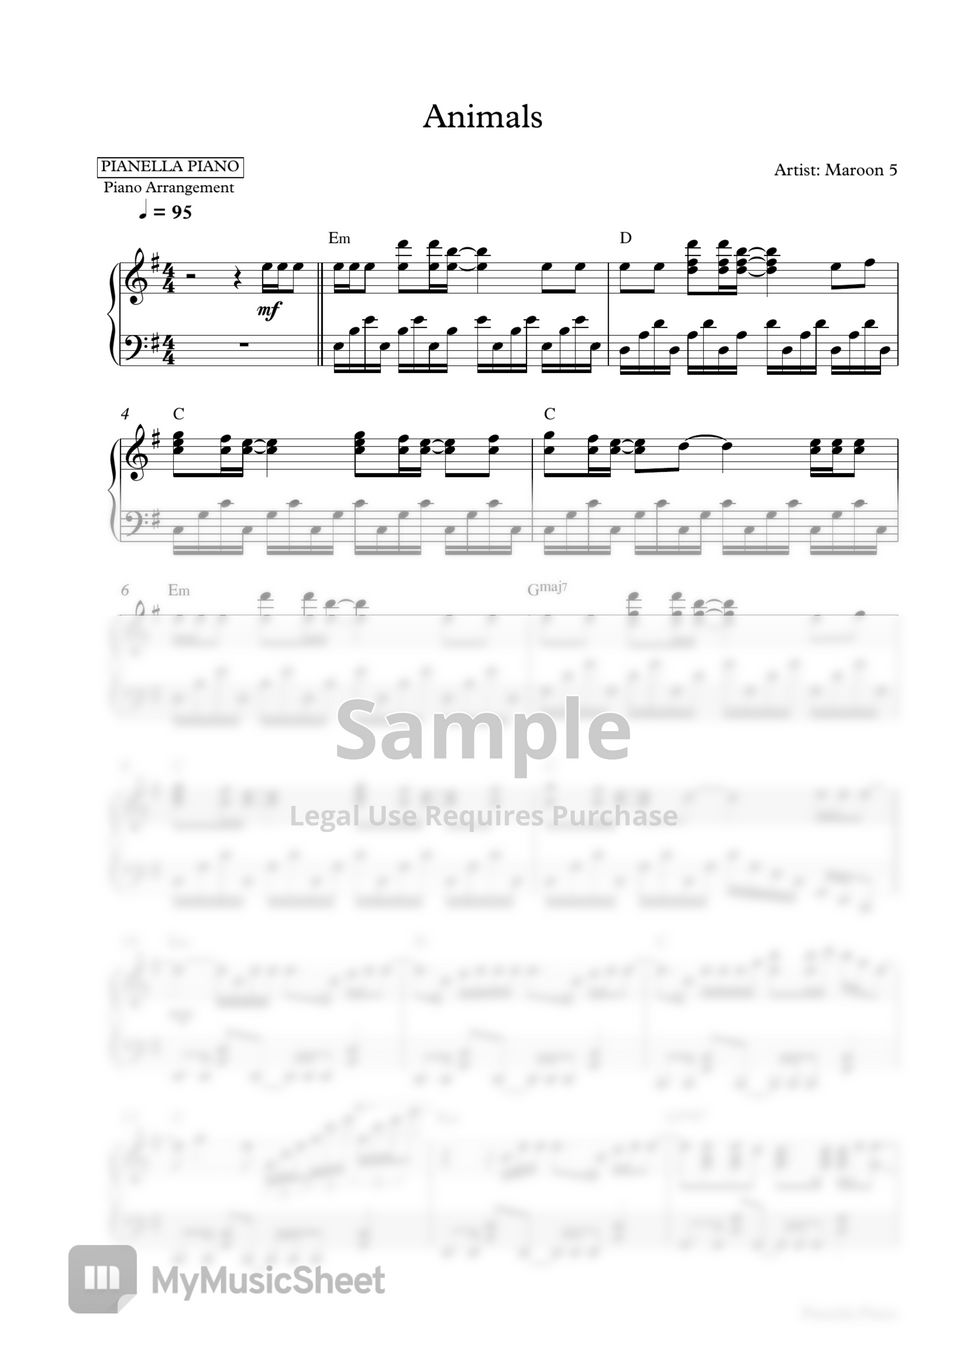 Maroon 5 - Animals (Piano Sheet) by Pianella Piano